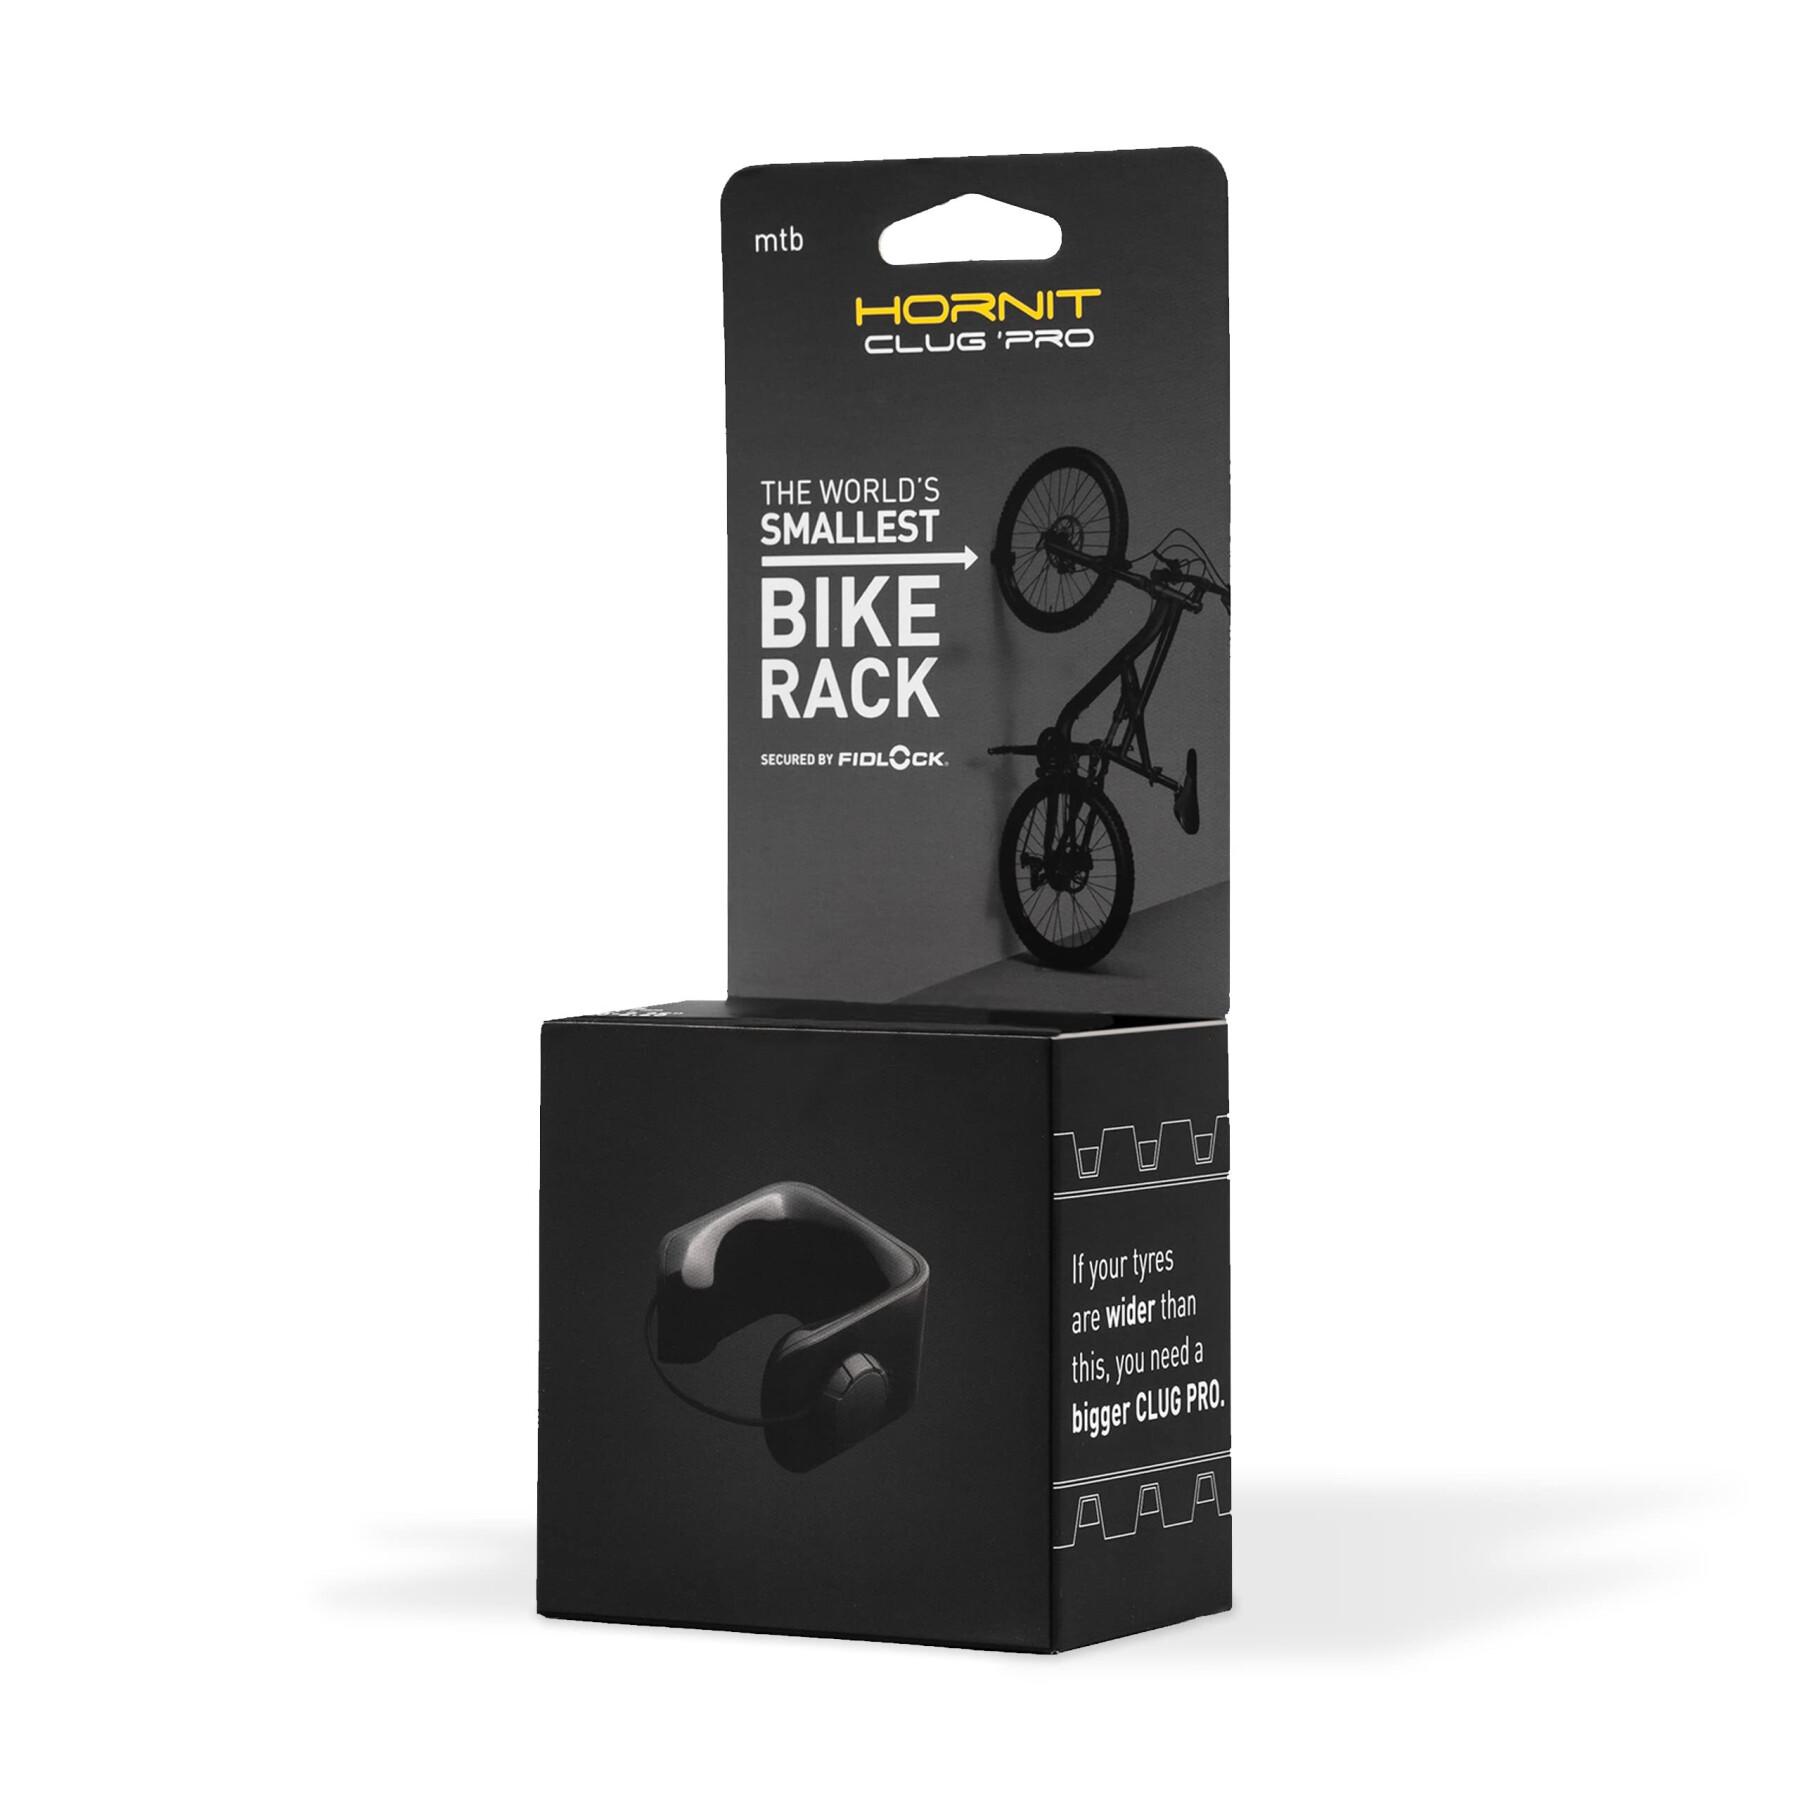 Bike rack Hornit Clug Pro - Mtb